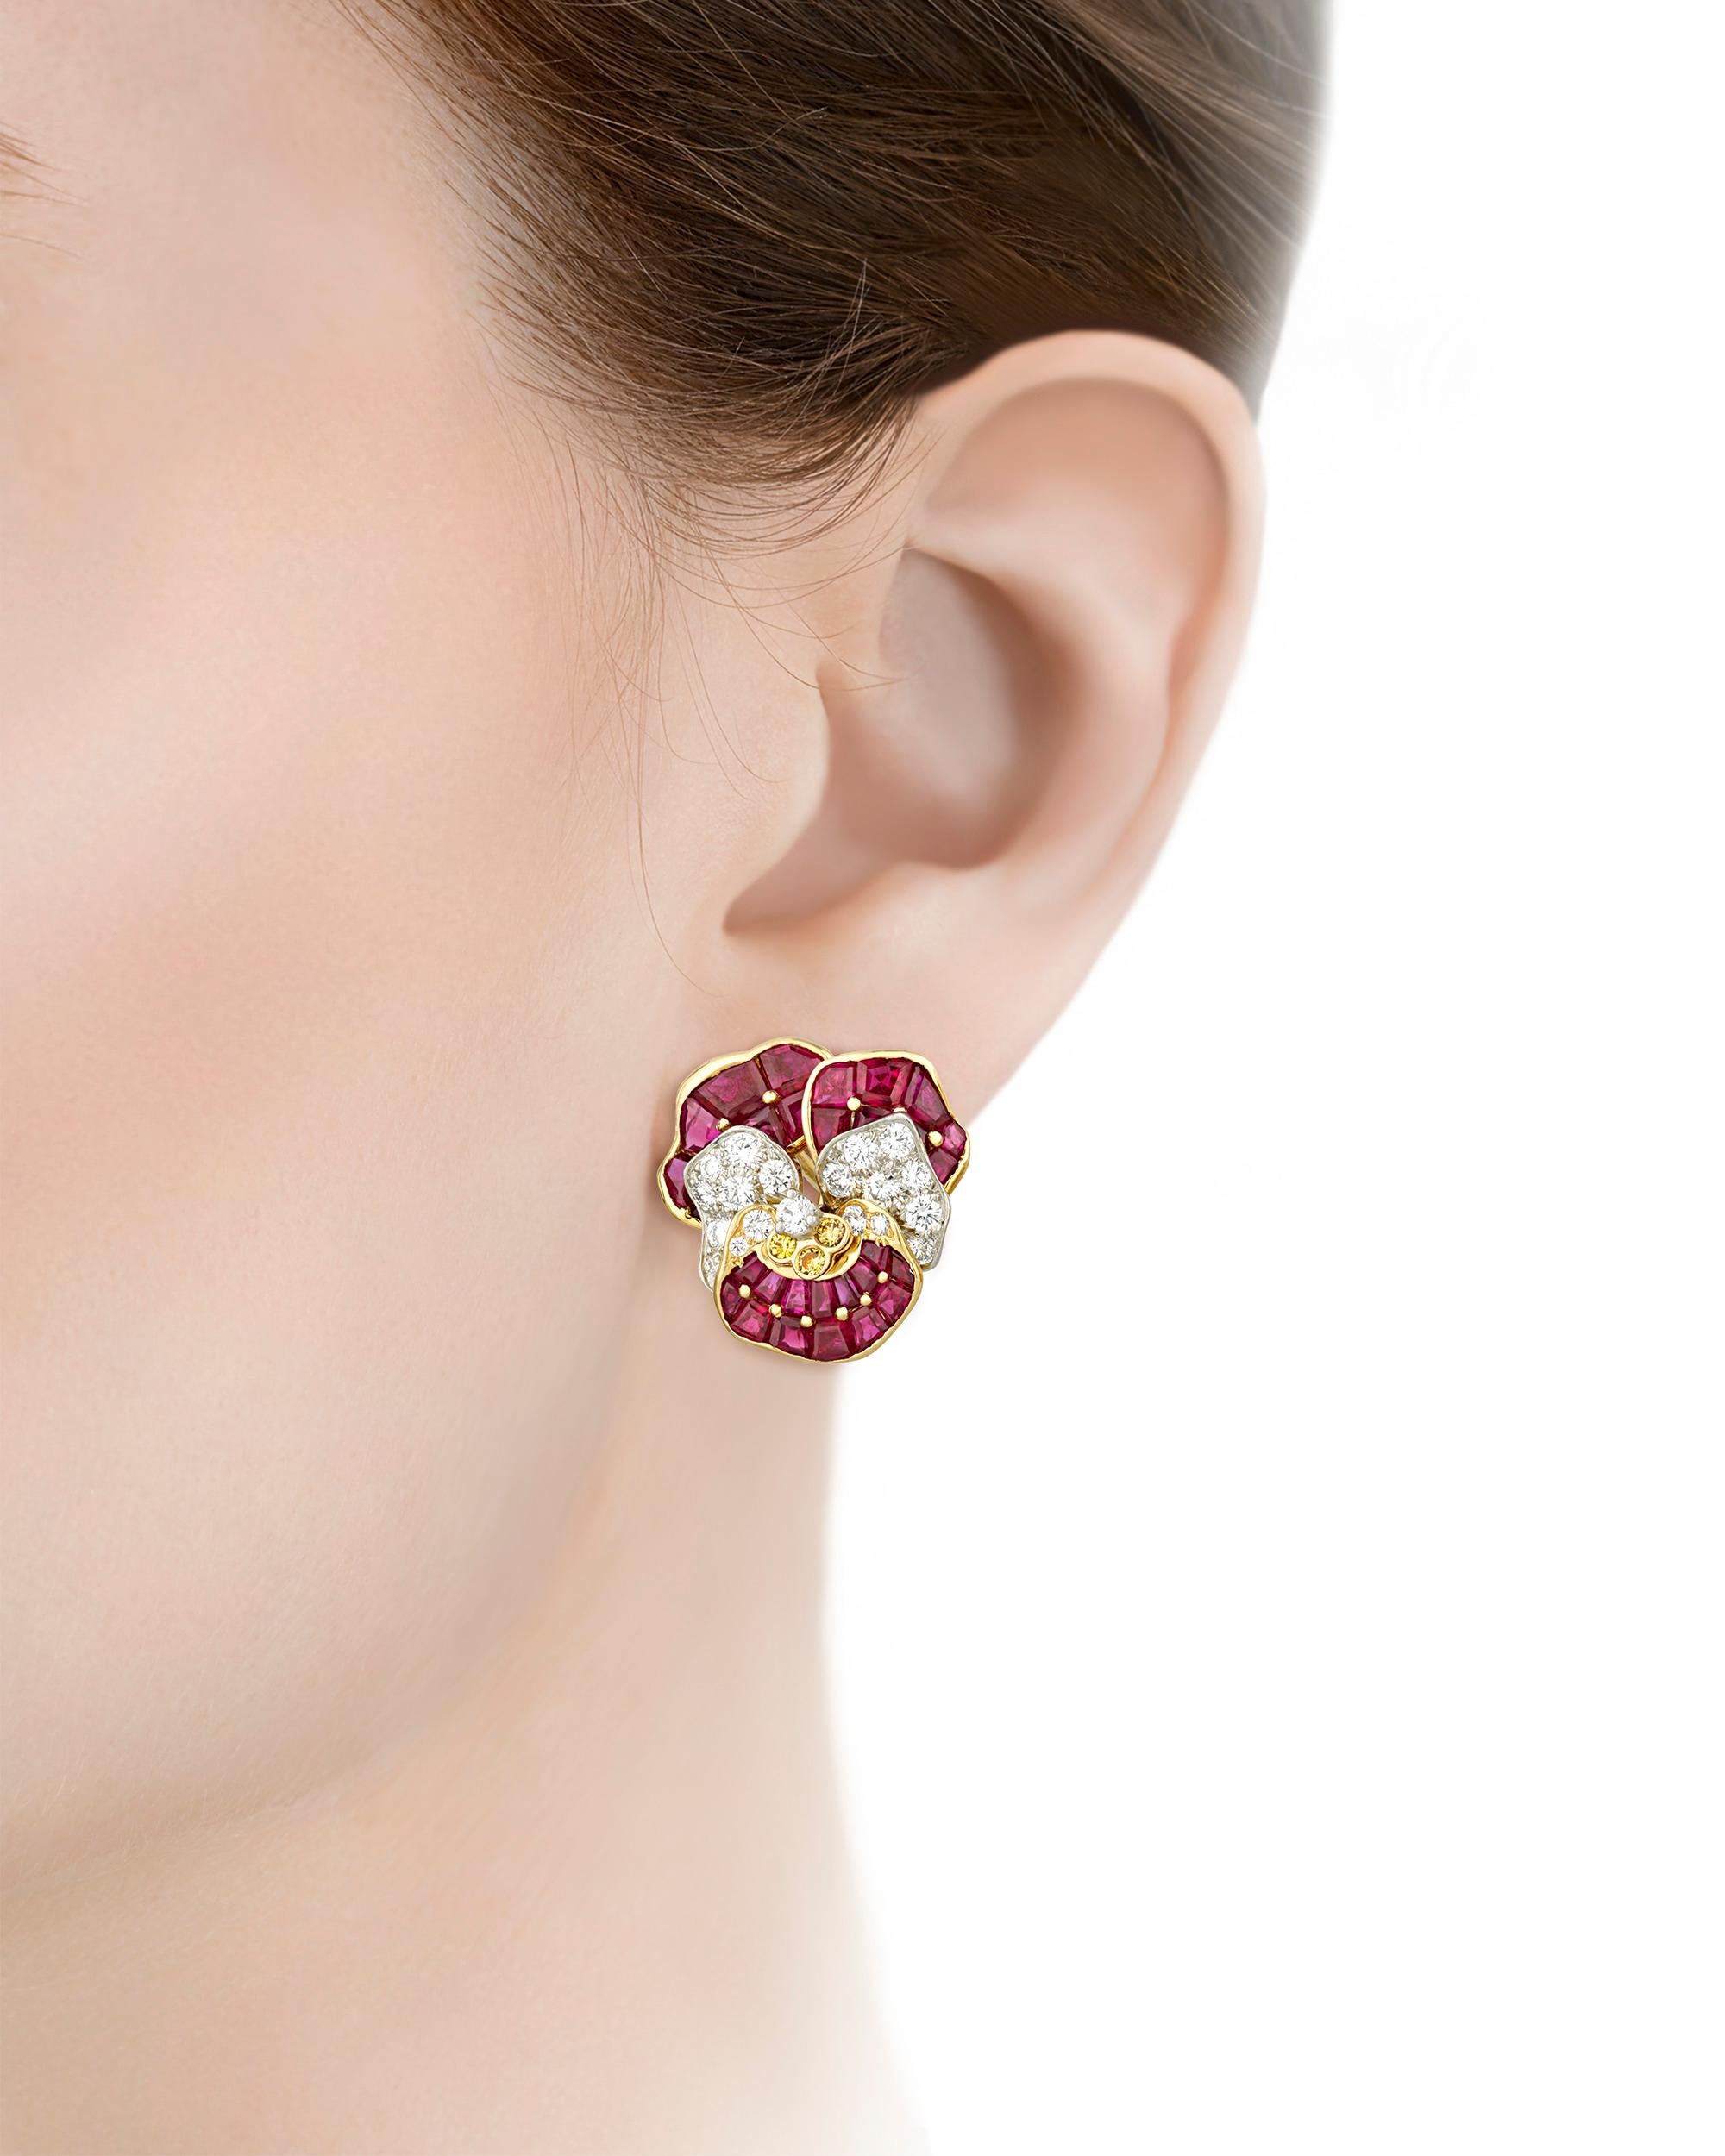 ruby and oscar earrings